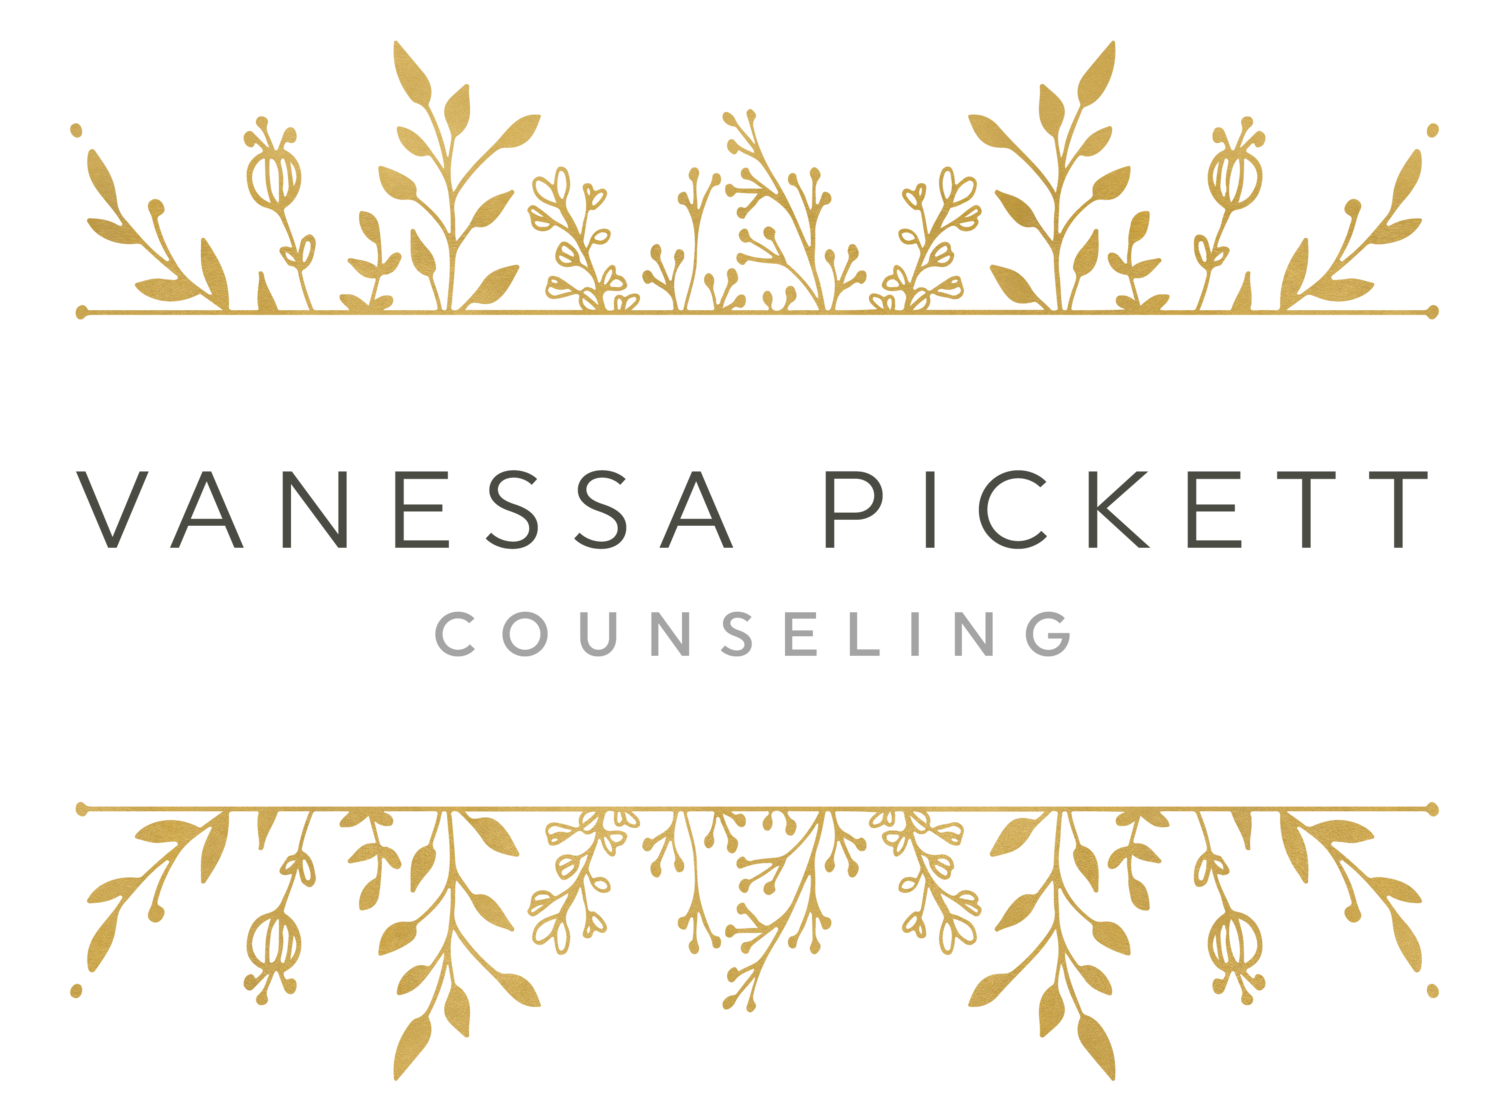 Vanessa Pickett Counseling